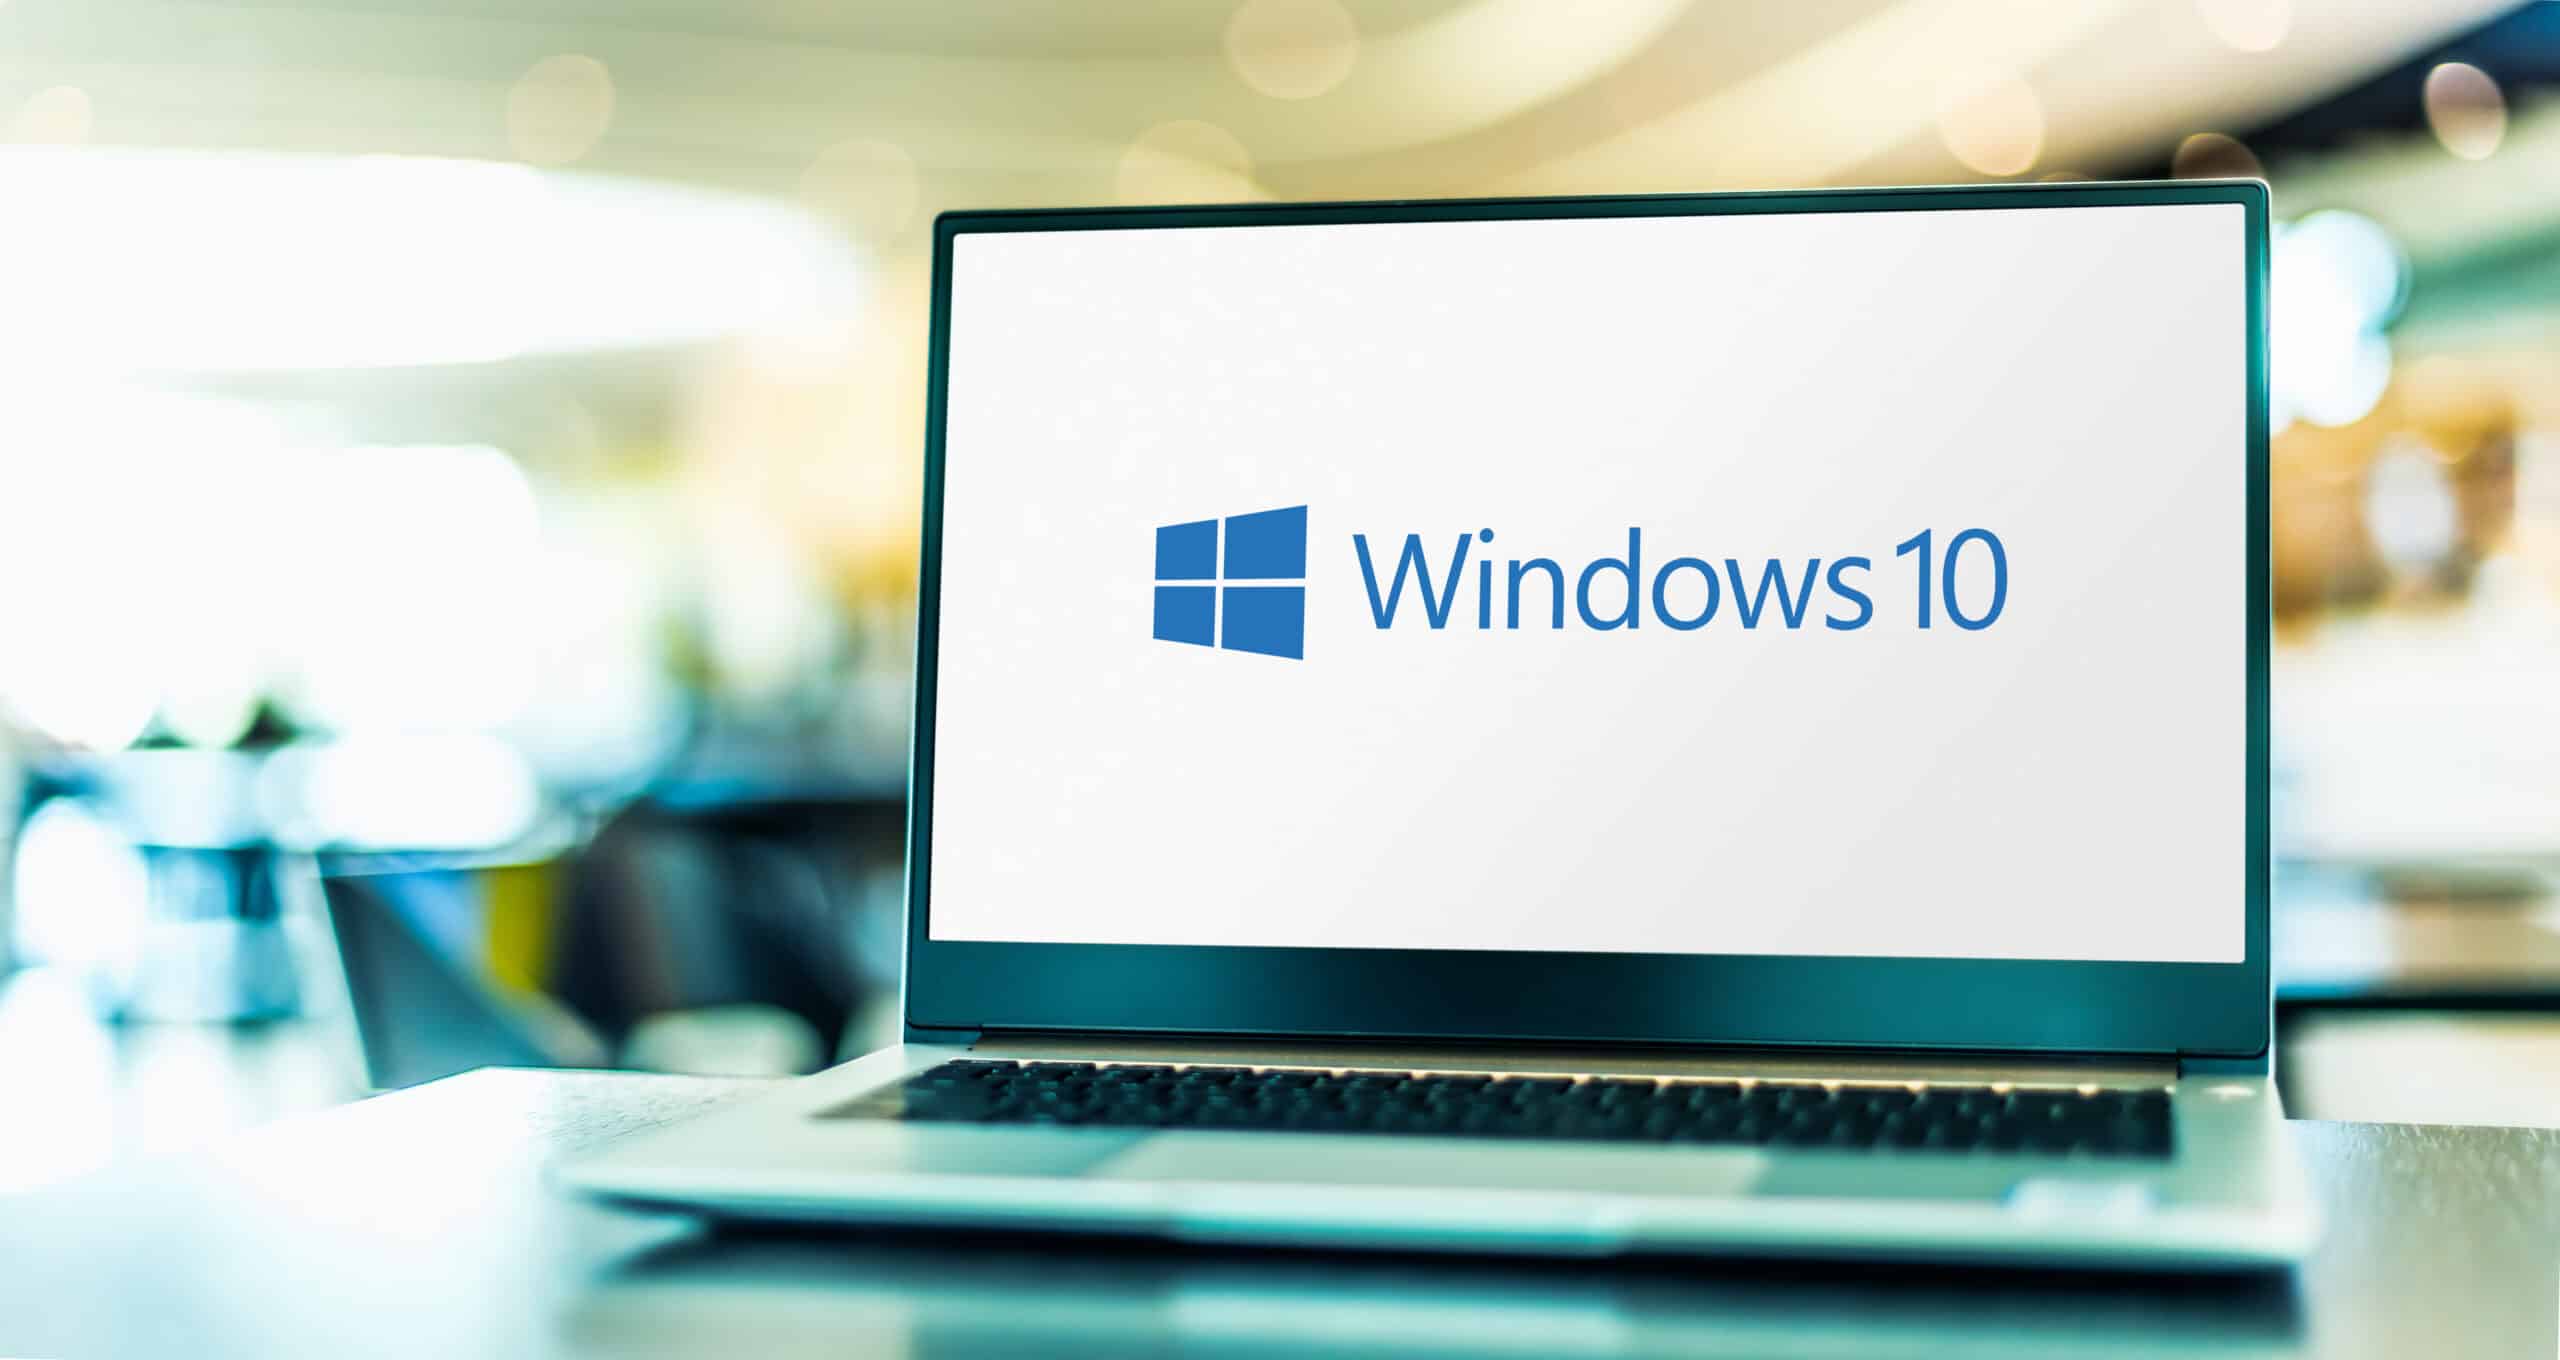 Windows 10 logo on a laptop screen